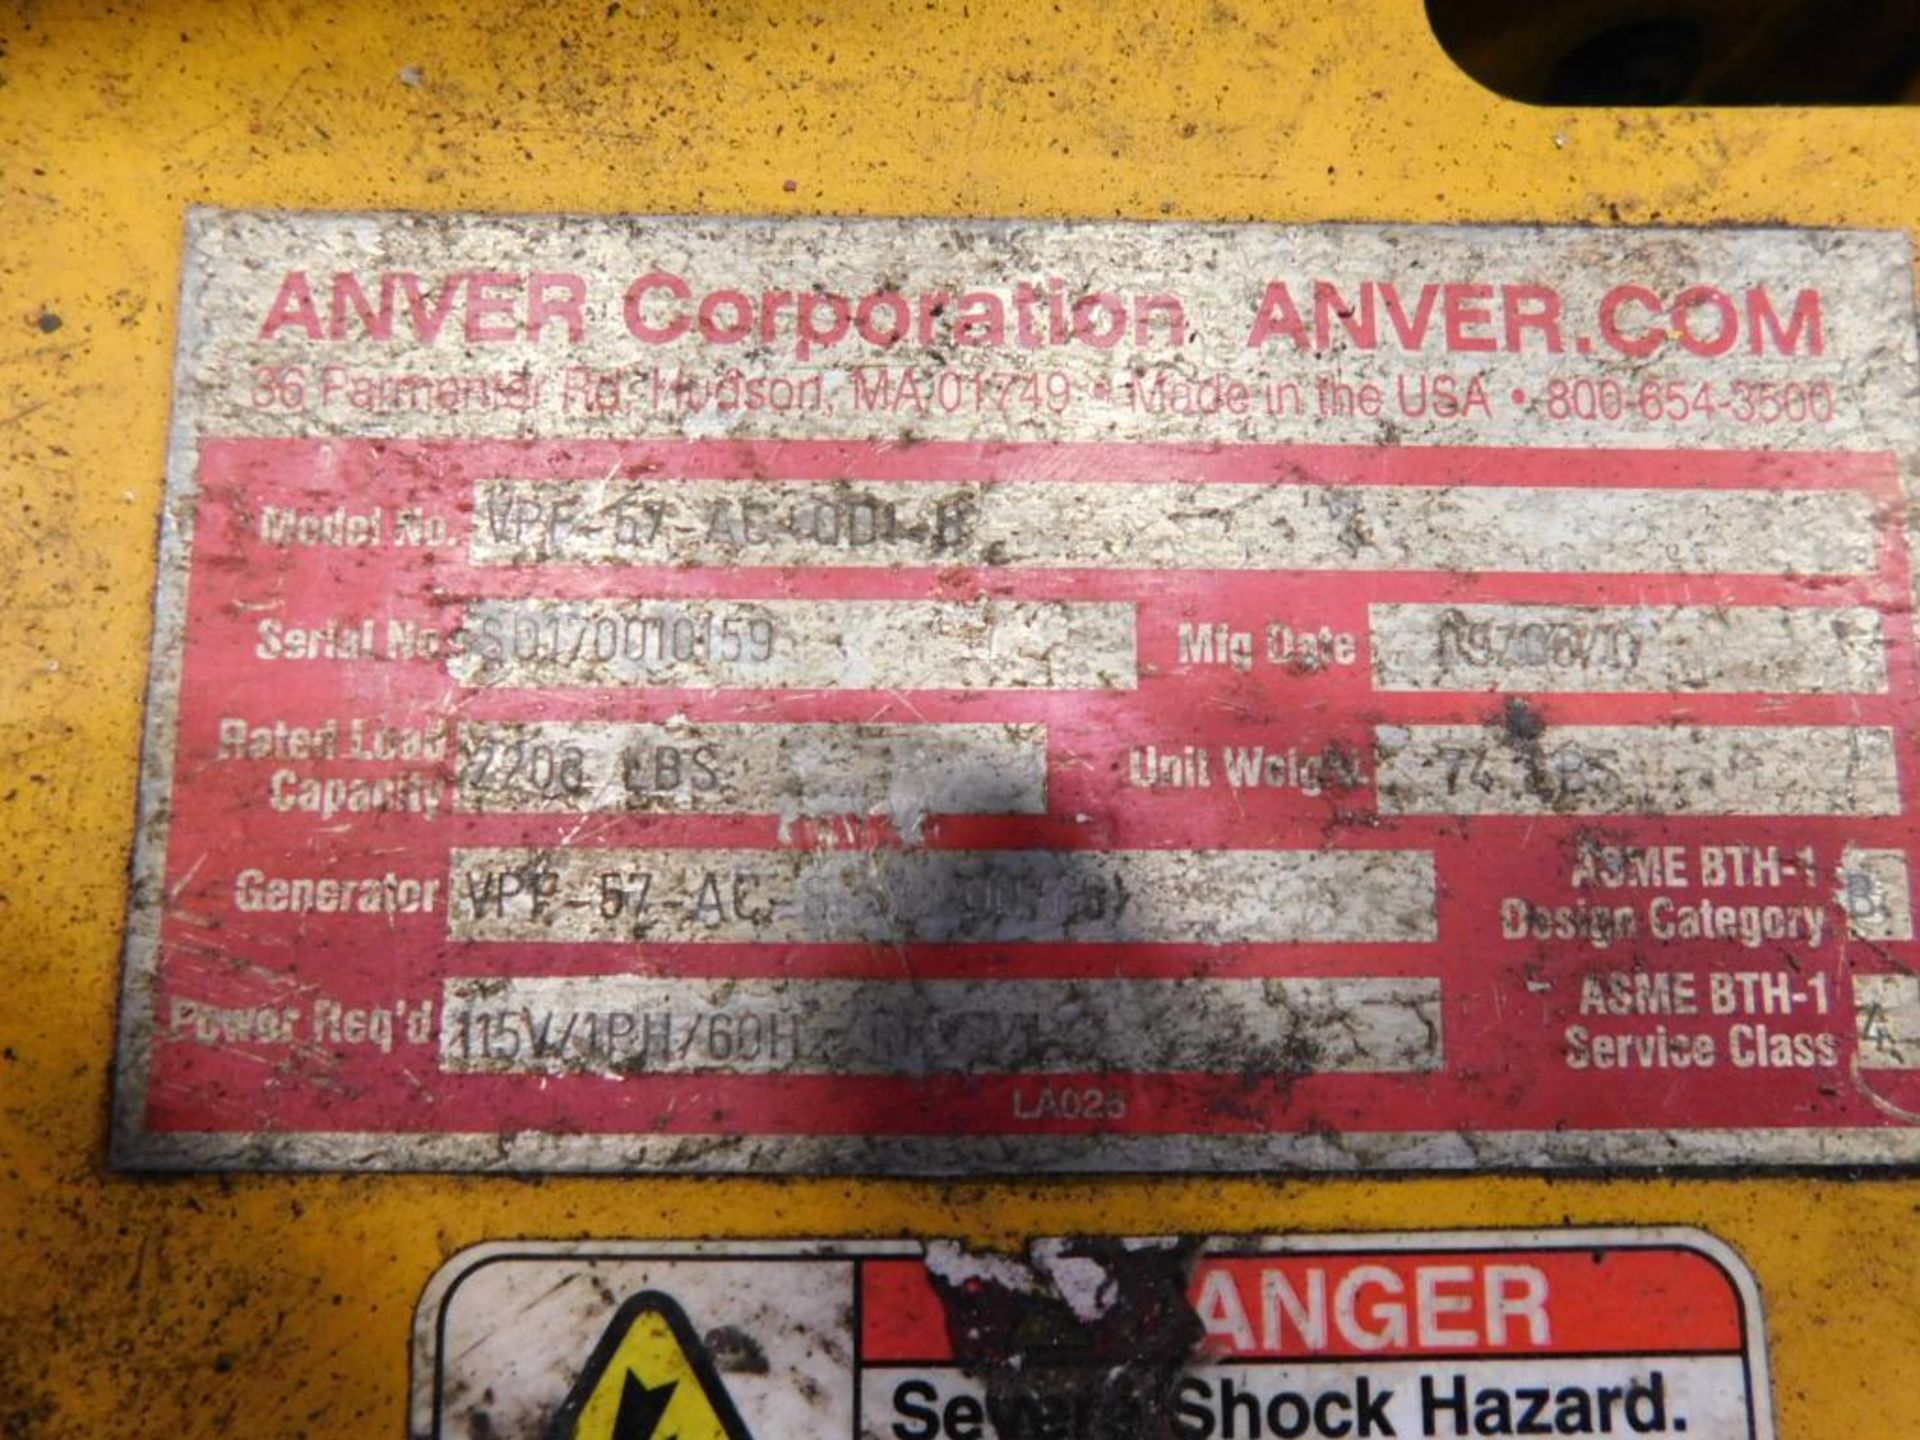 Anver VPF-57-AC Vac-Pack 1-Ton Vacuum Lifter - Image 5 of 7